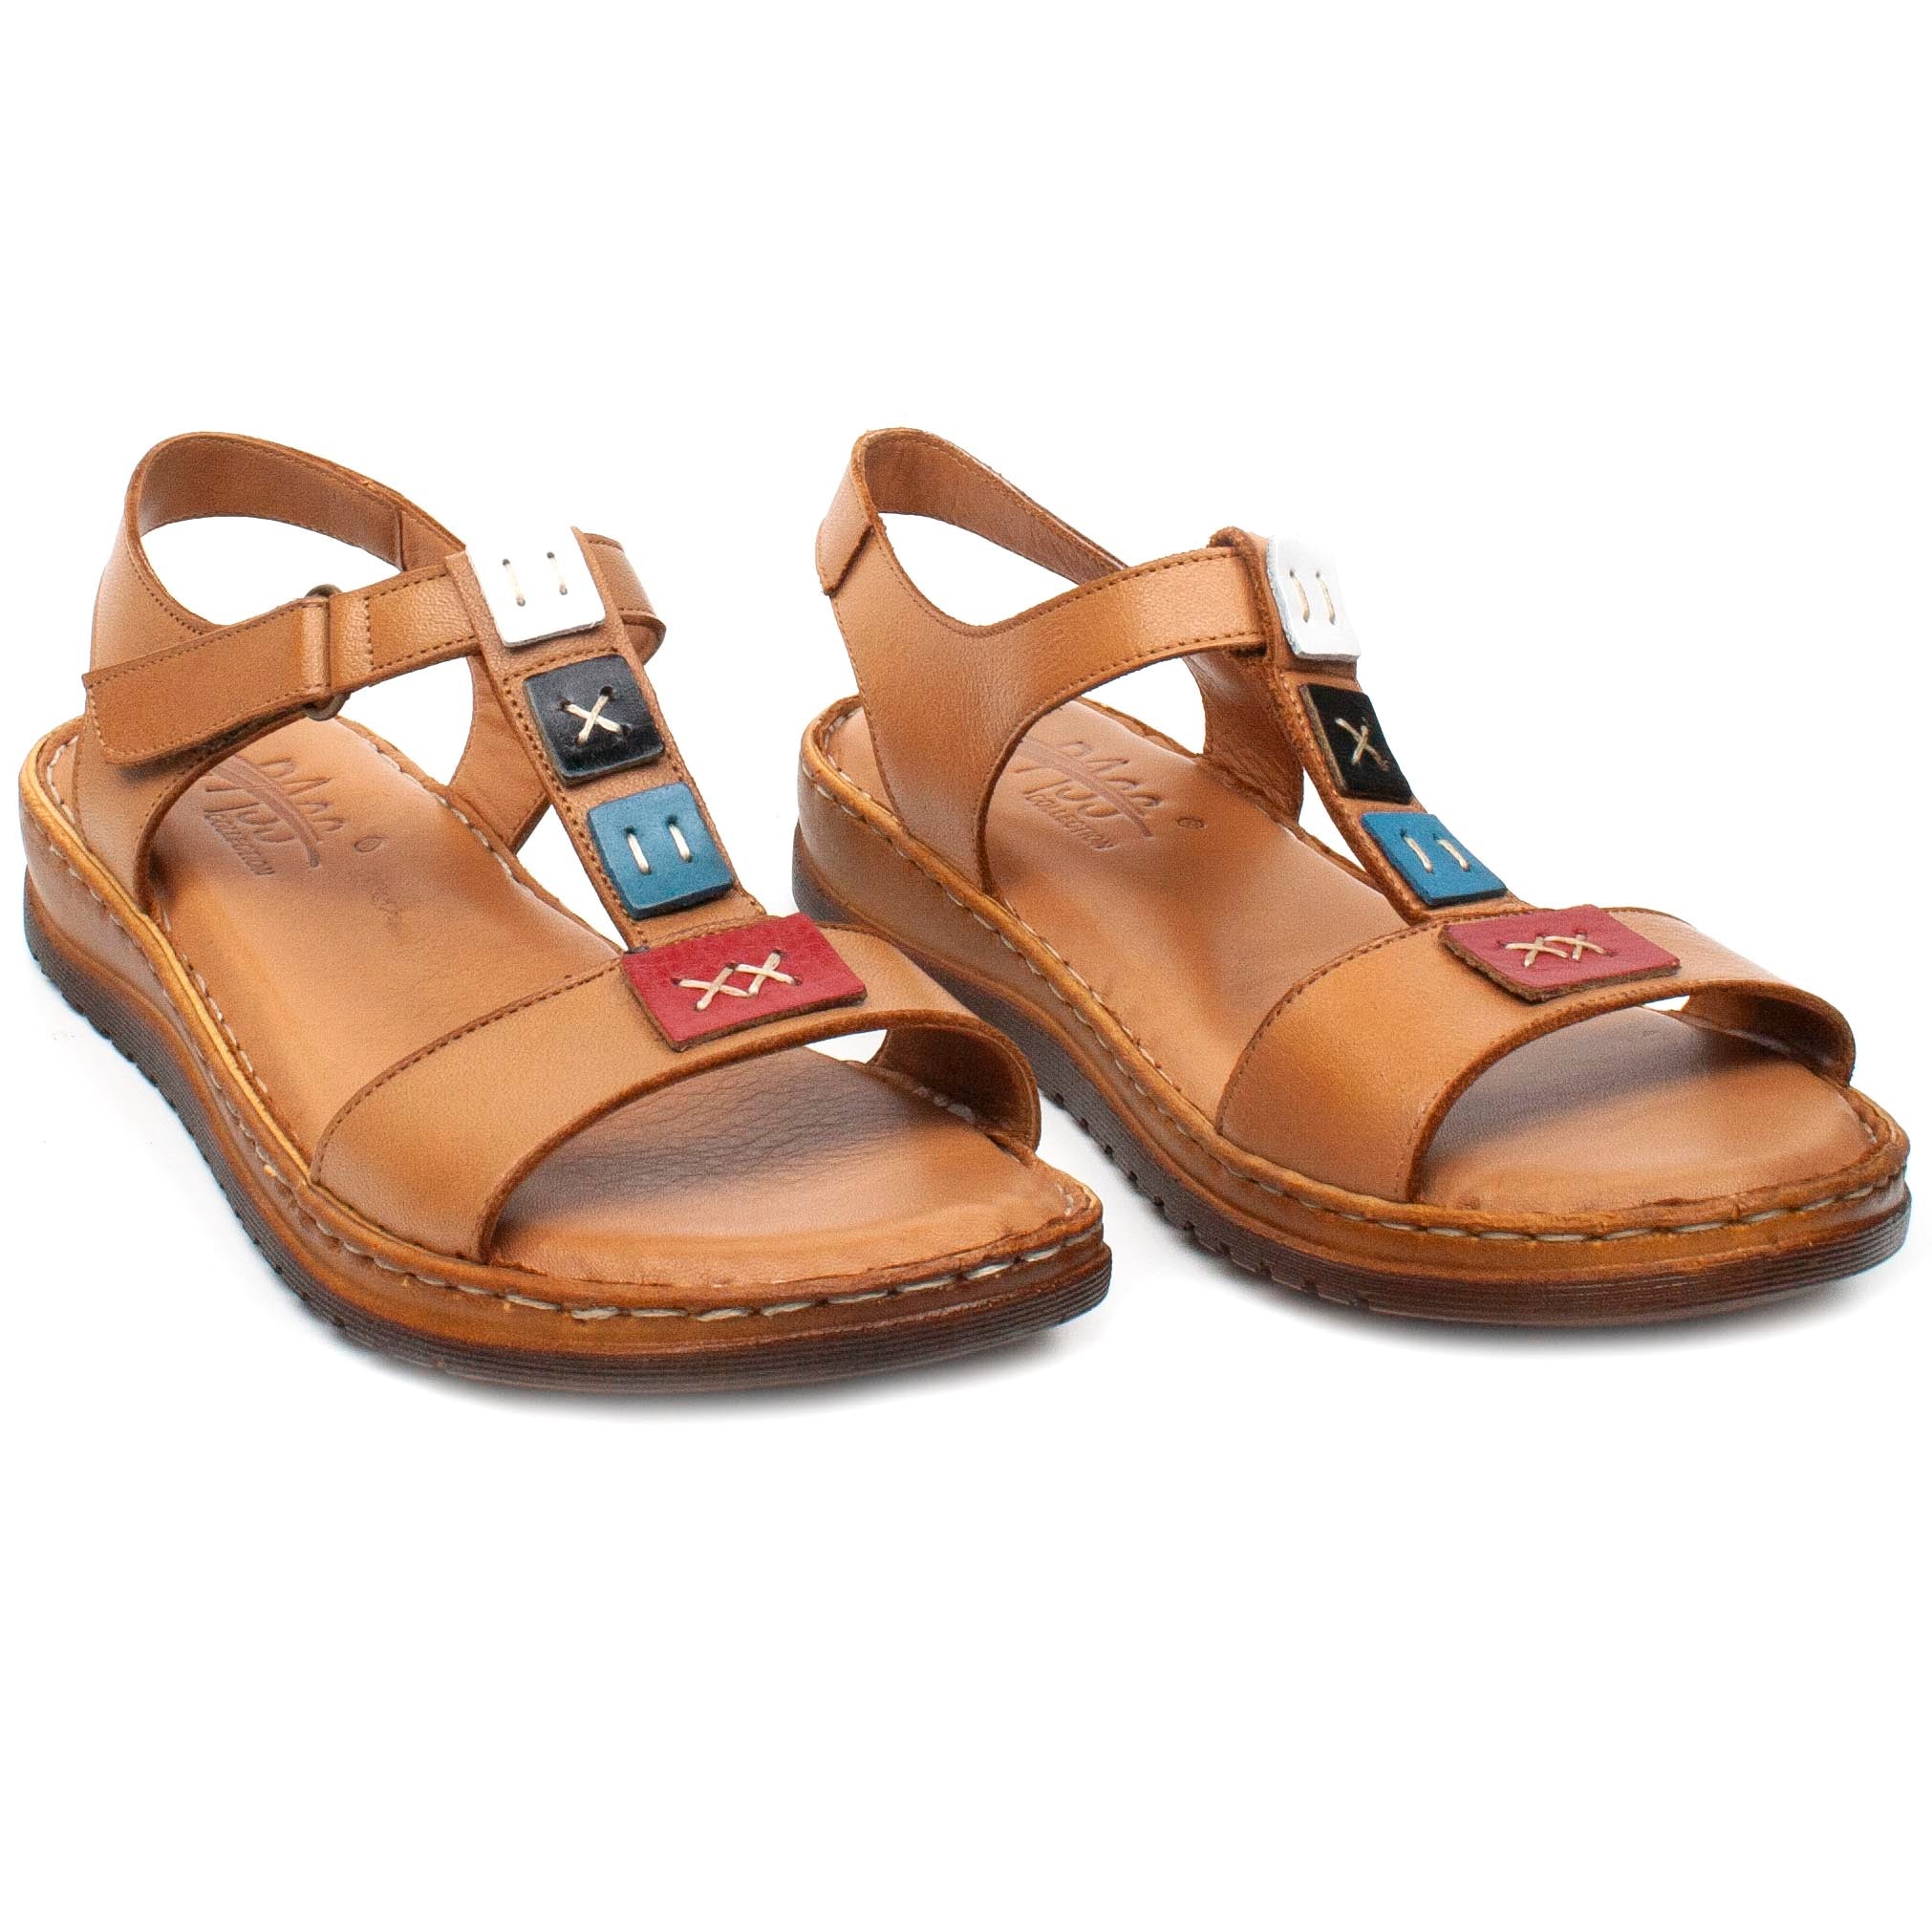 Pass Collection Sandale dama E24900 02 N maro ID2562-MARO